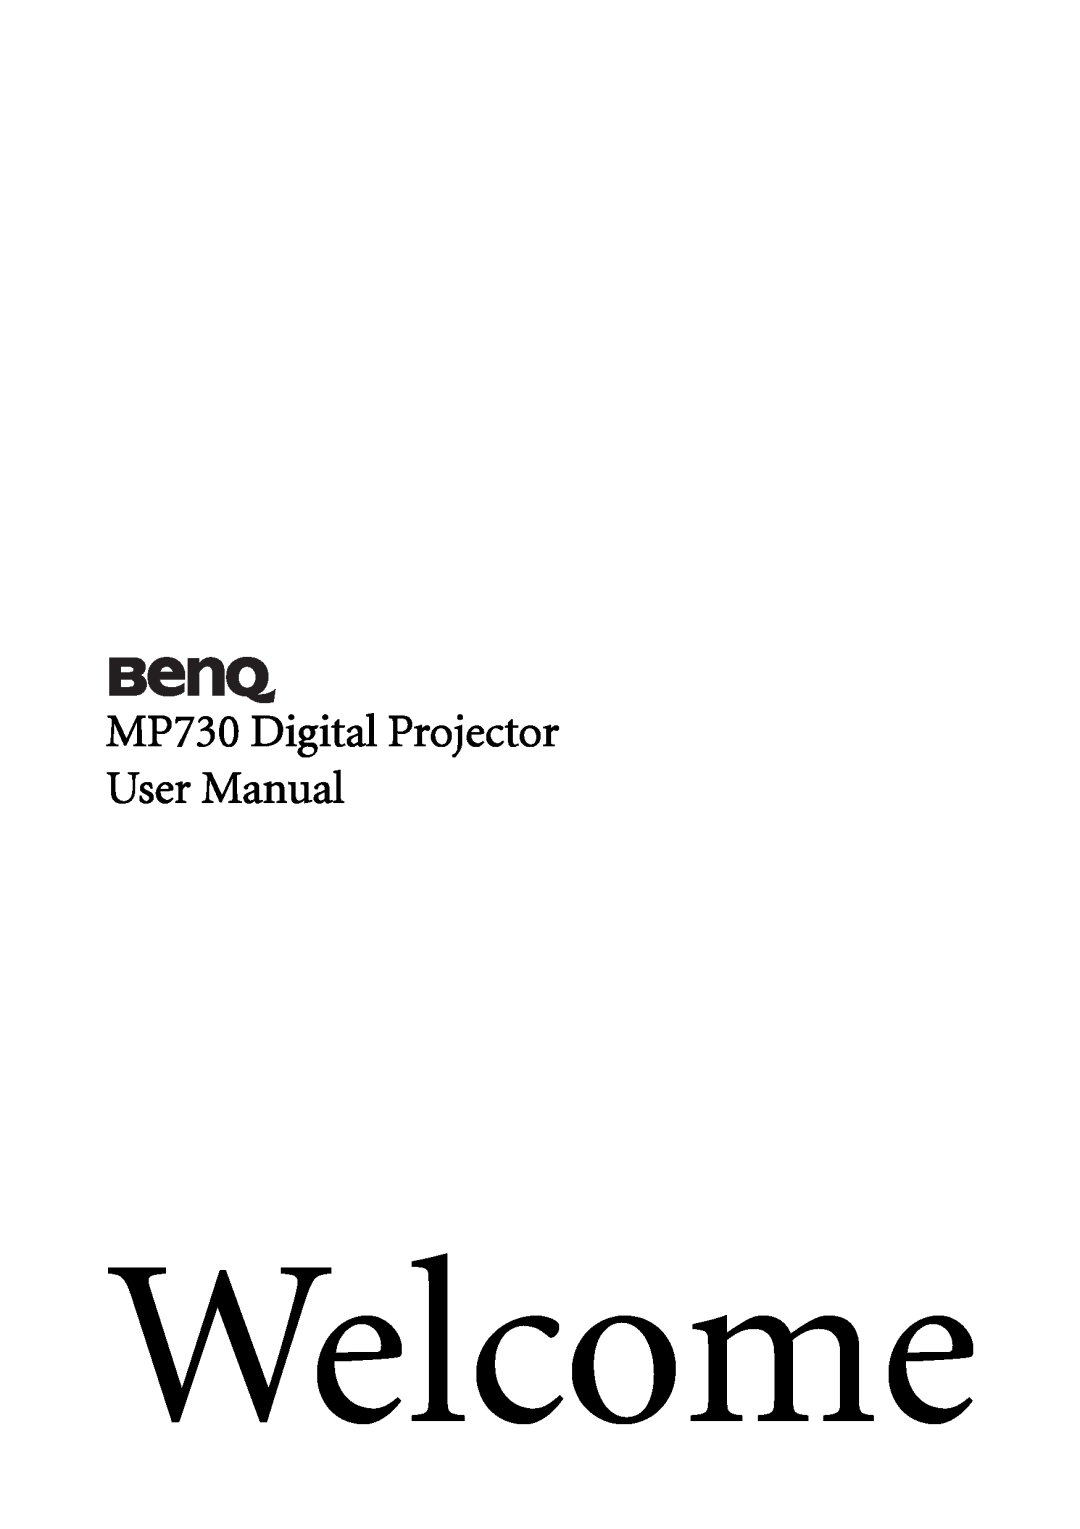 BenQ manual Welcome, MP730 Digital Projector User Manual 